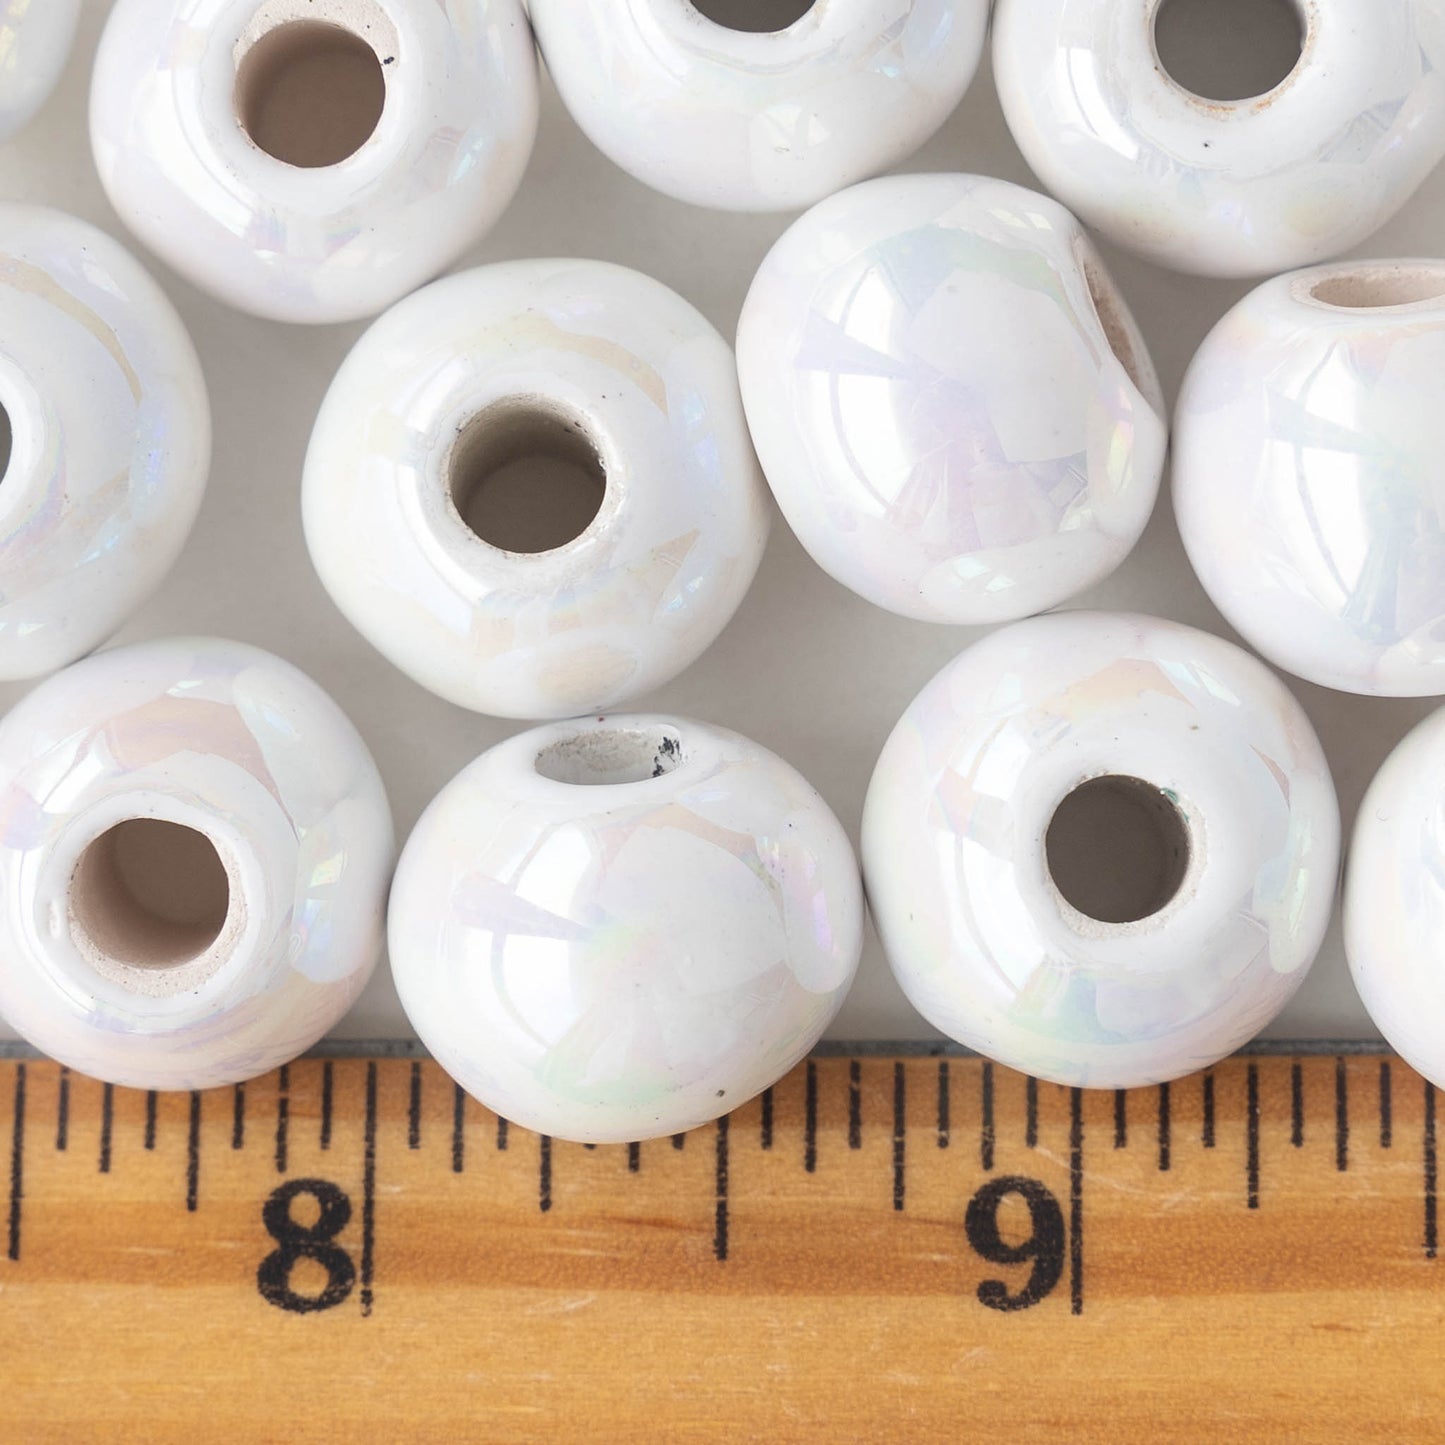 16mm Glazed Ceramic Round Beads - Iridescent Ivory Opal - 4 or 12